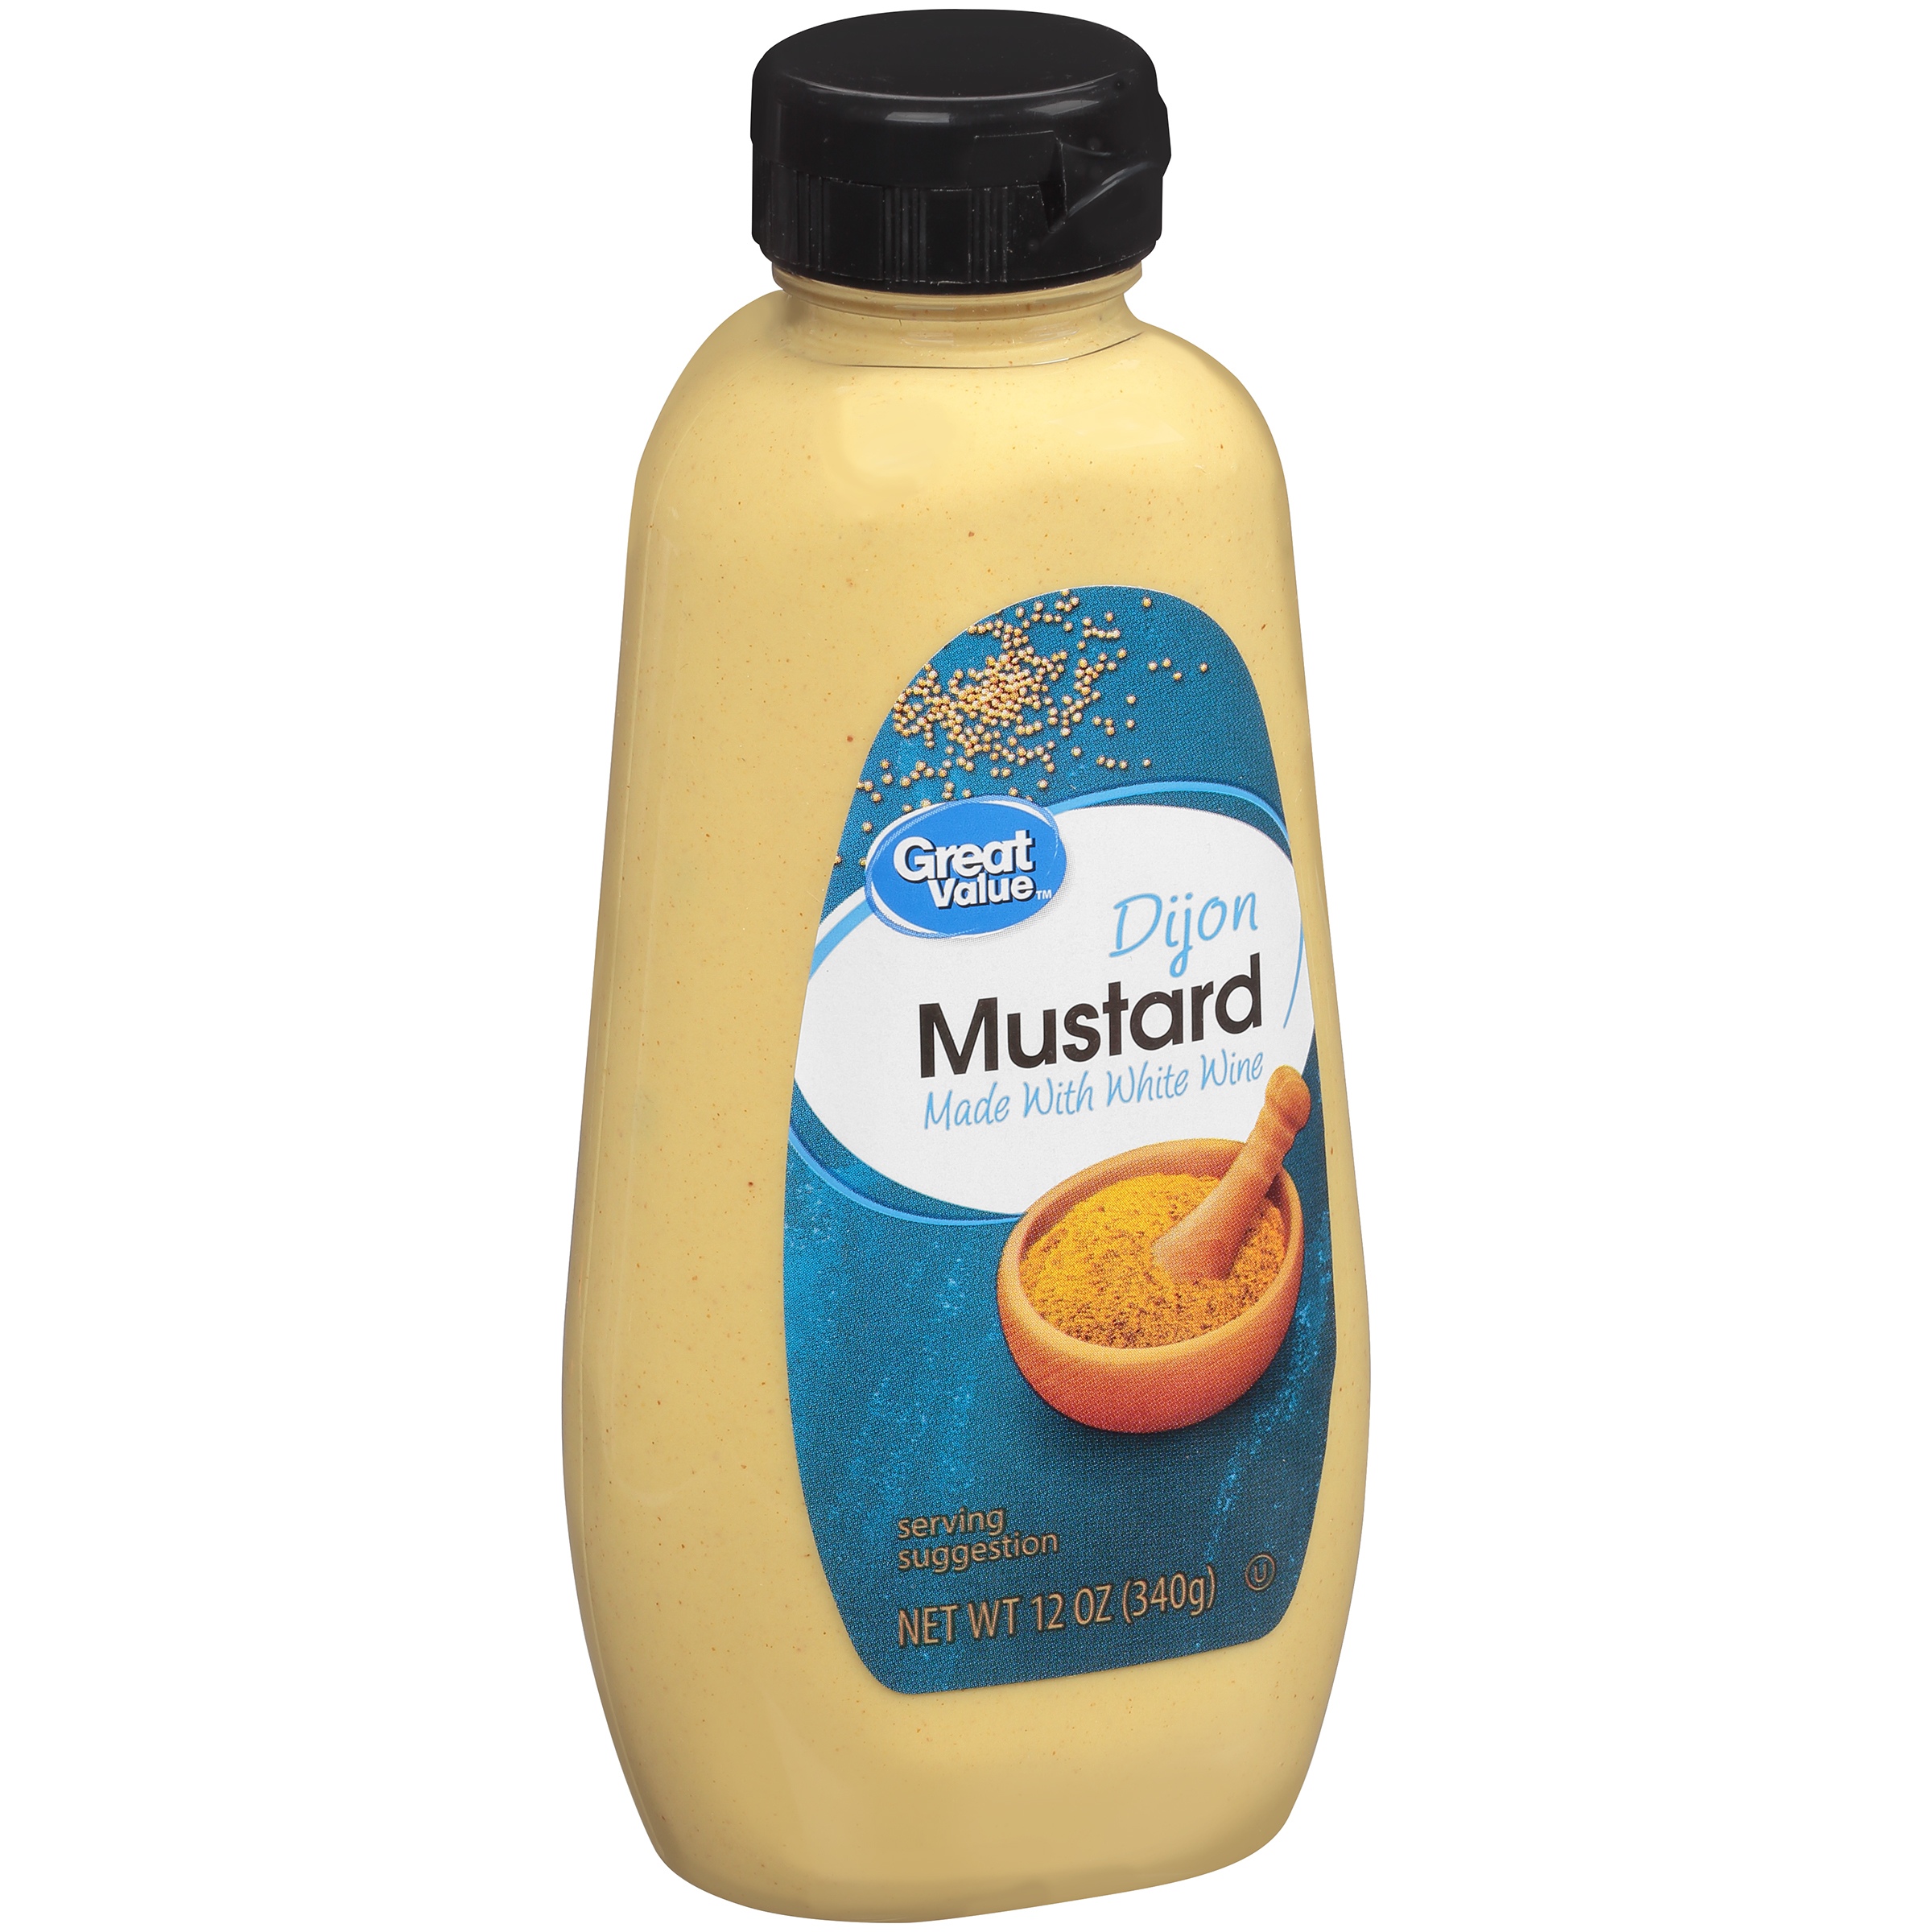 Great Value Dijon Mustard, 12 Oz Image